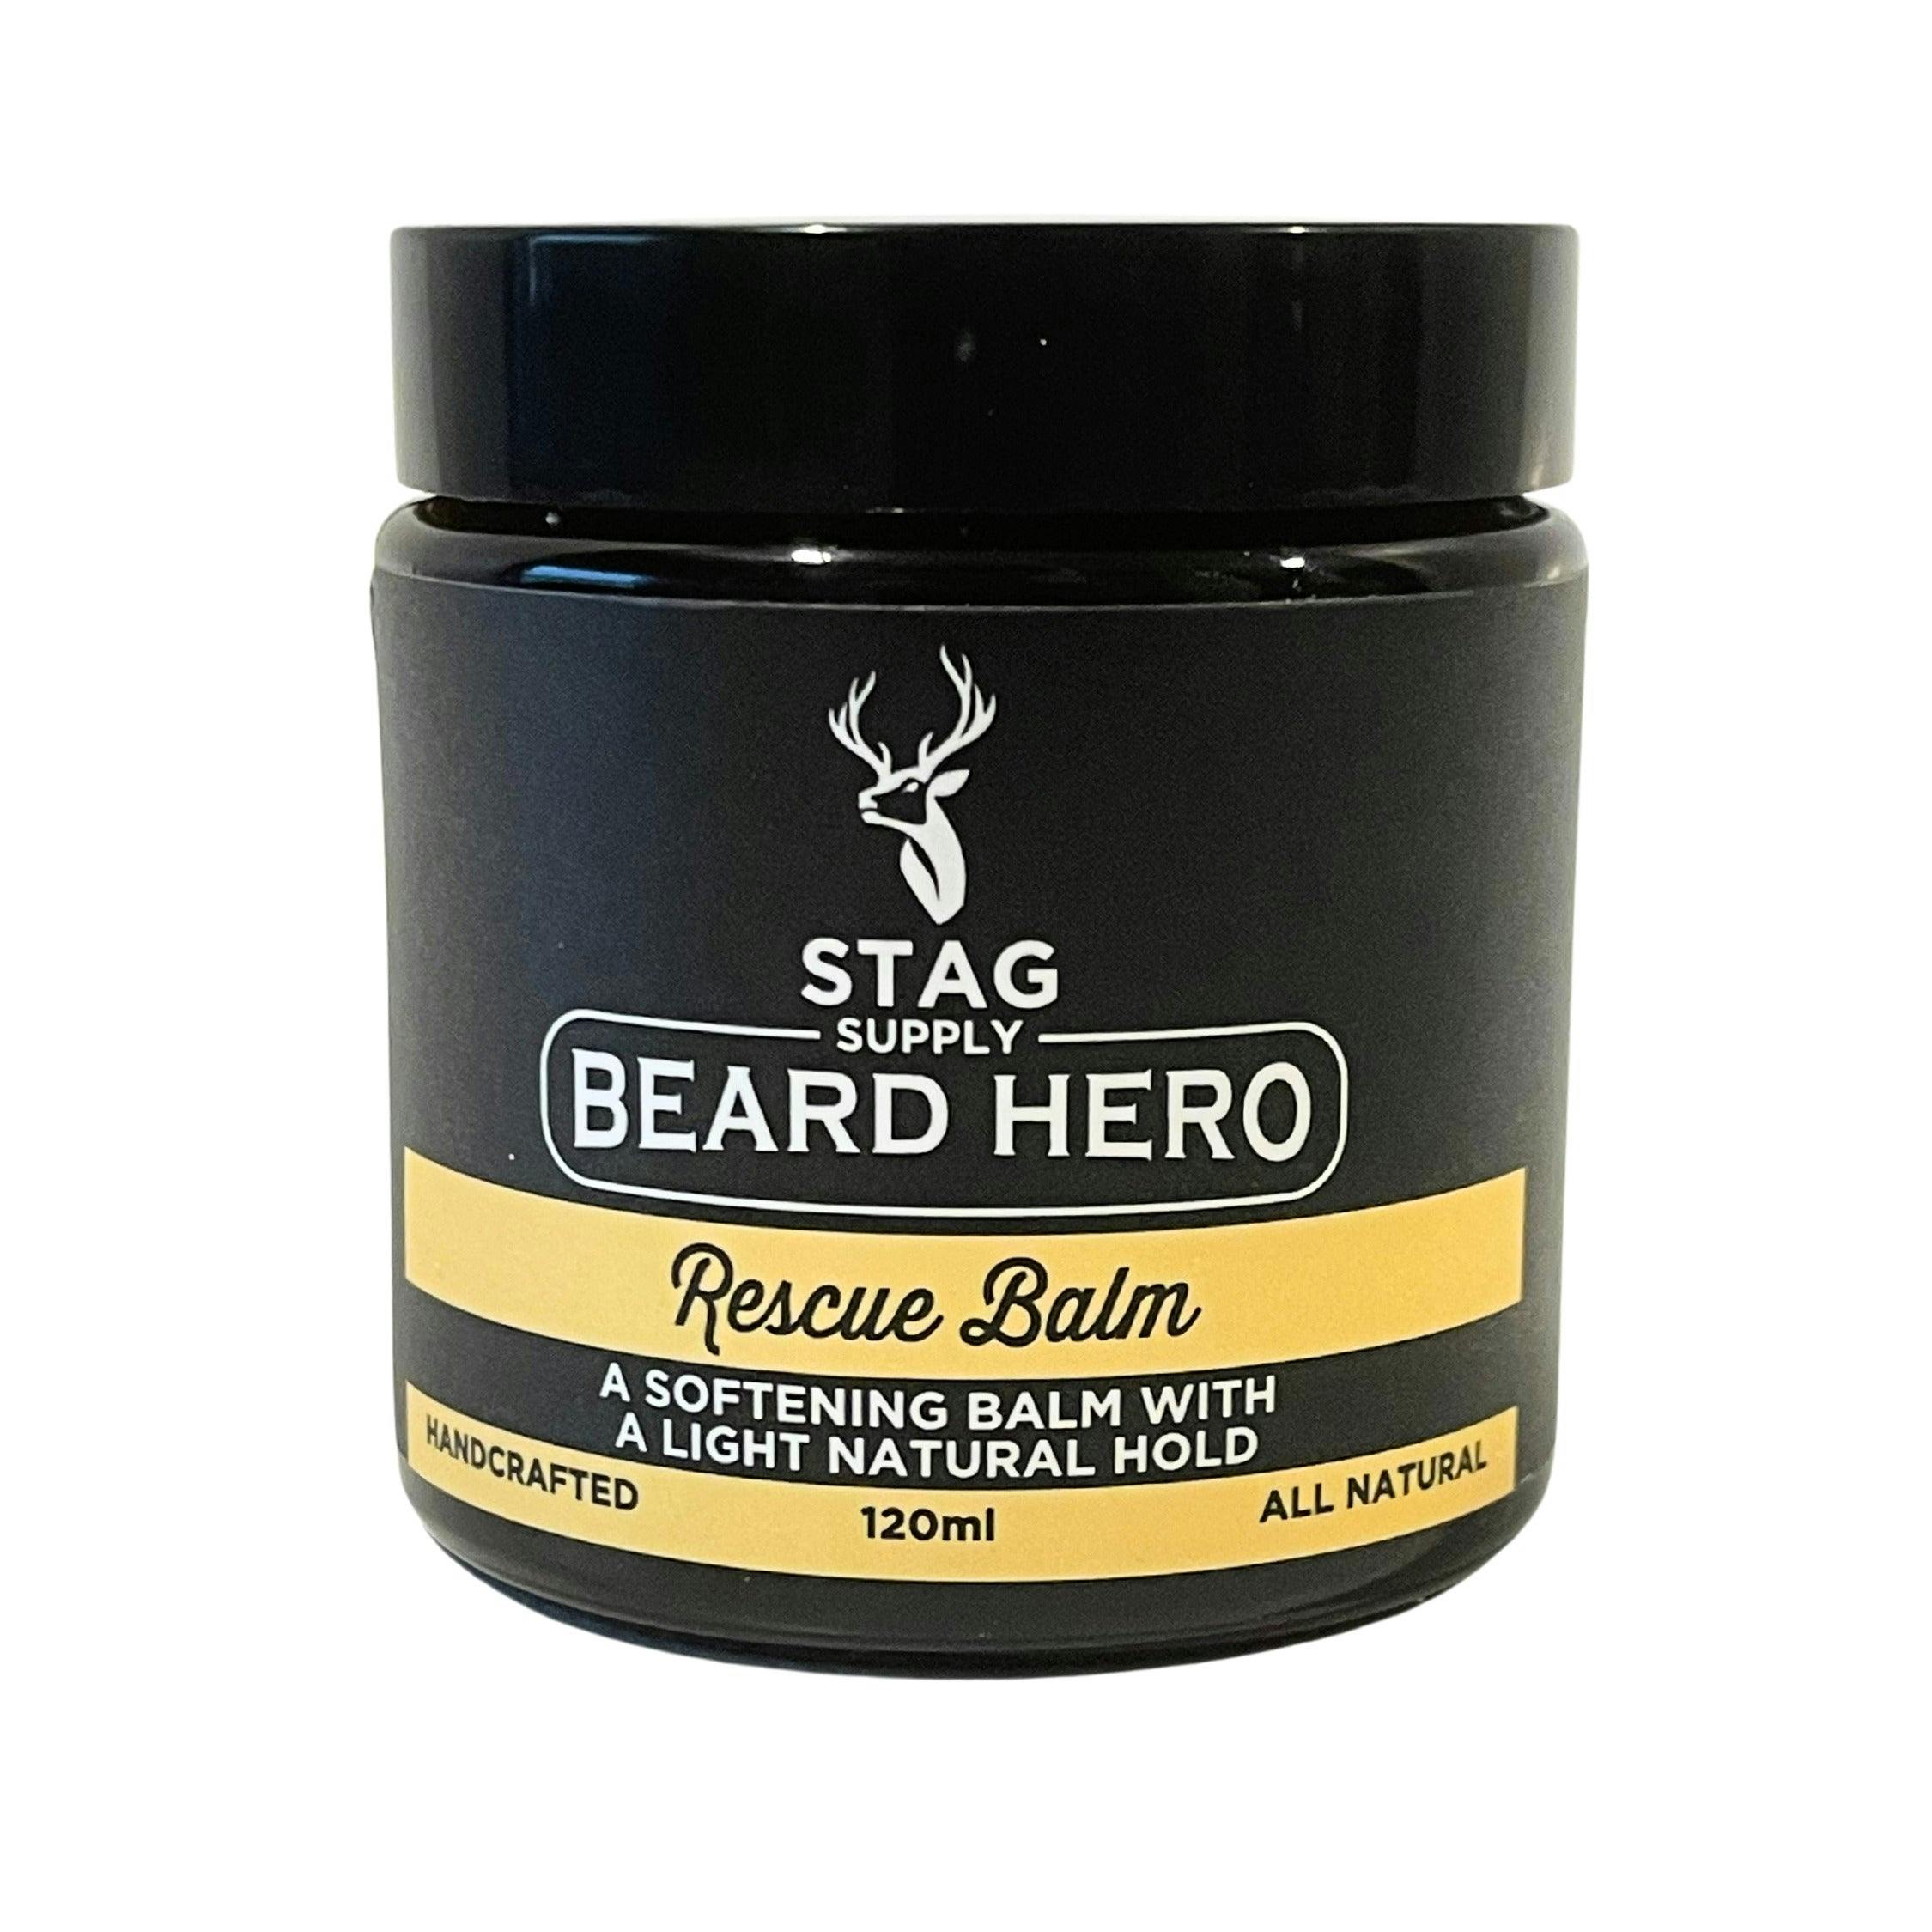 Stag Supply Beard Hero Rescue Balm 120ml